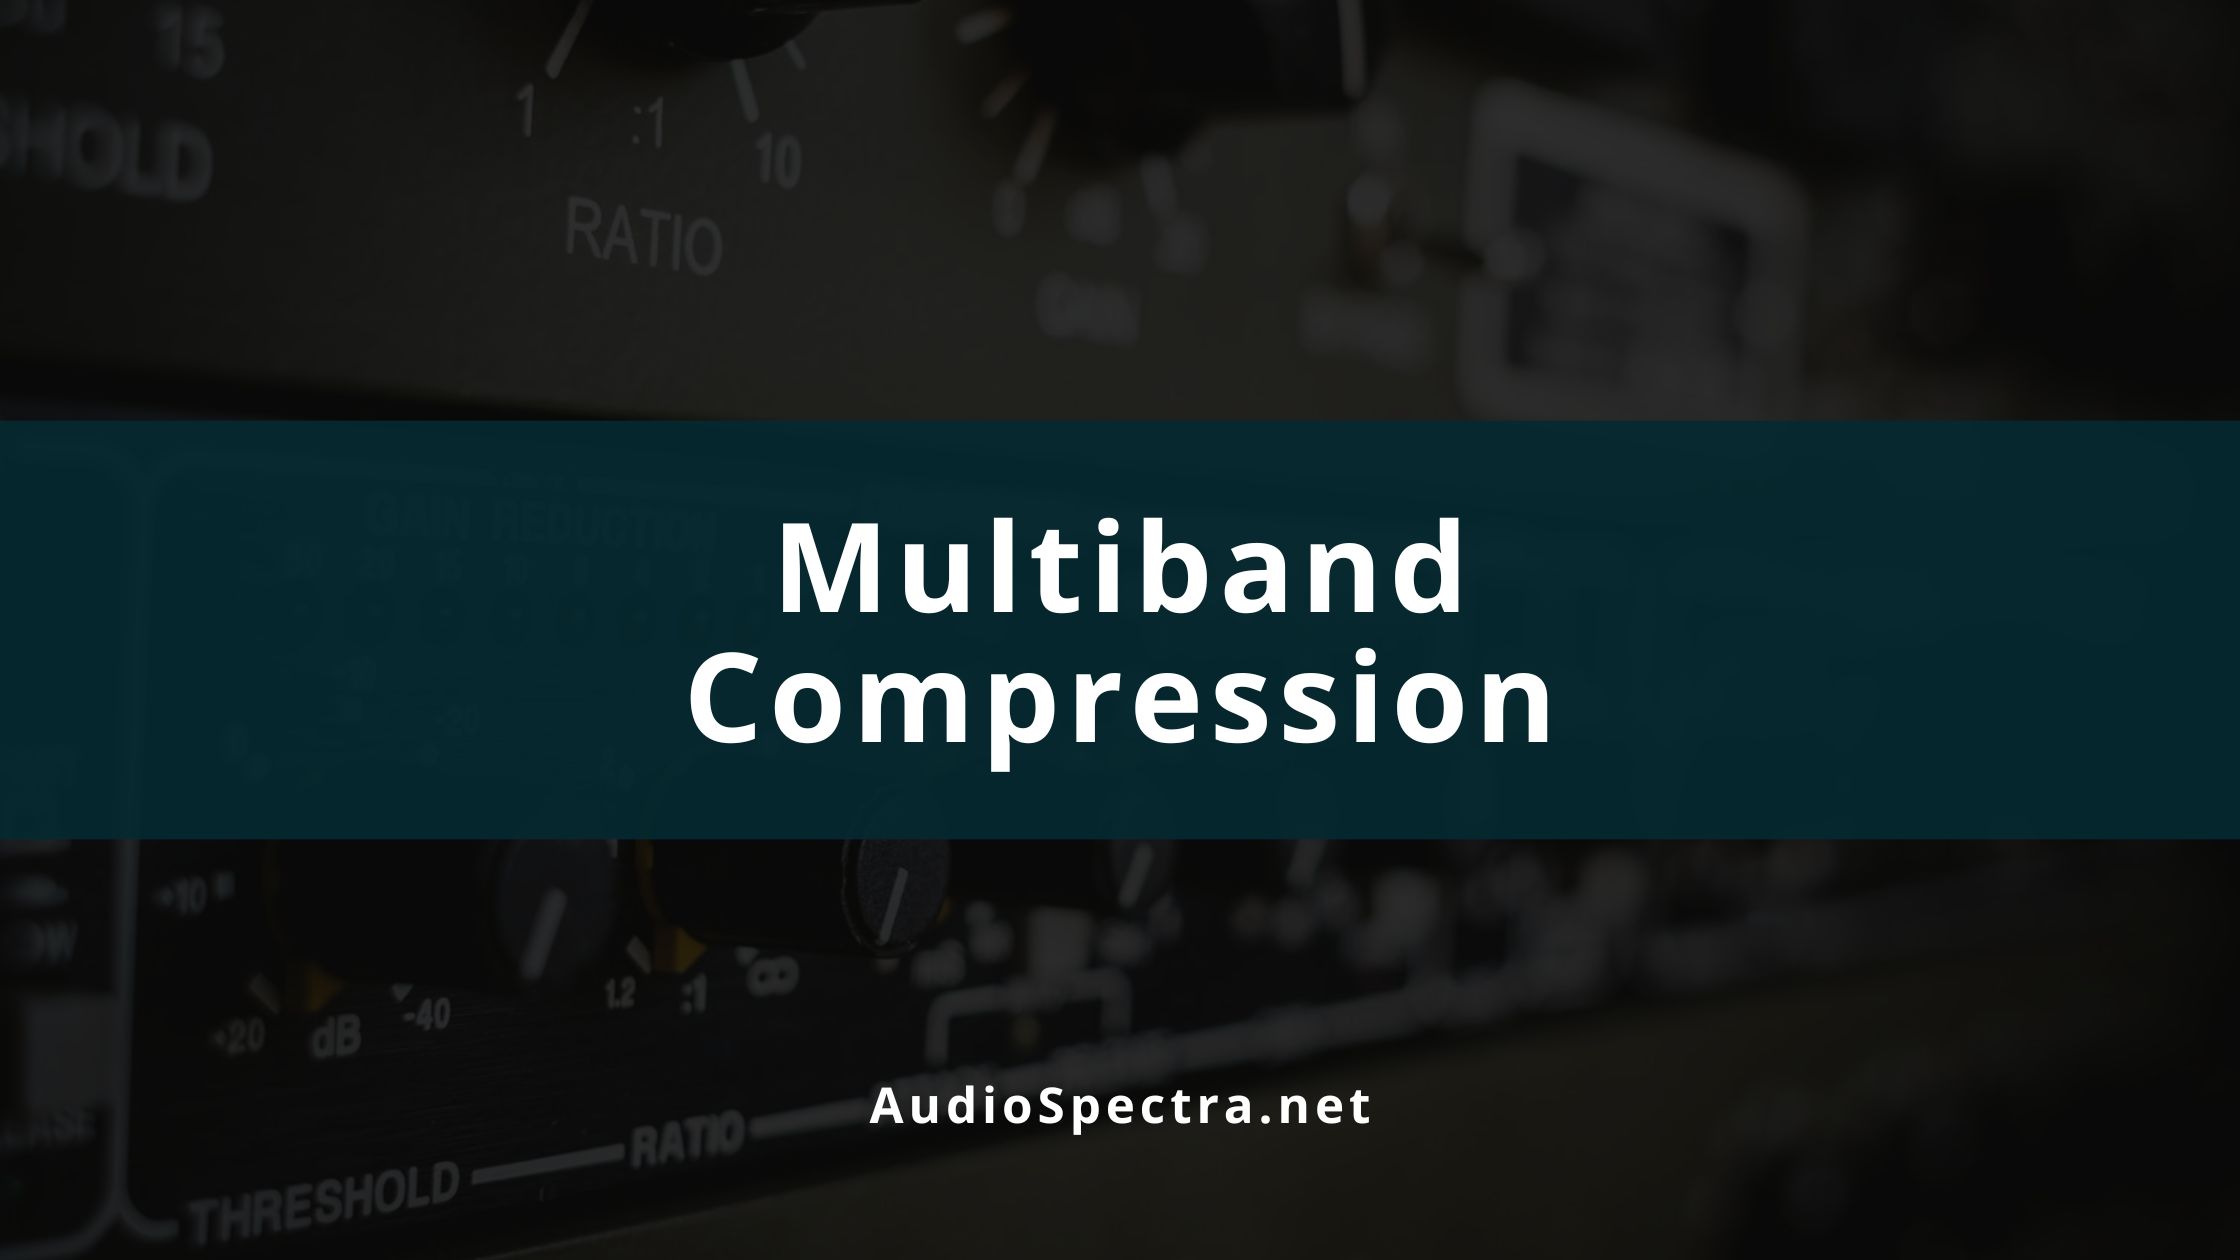 Multiband Compression Explained